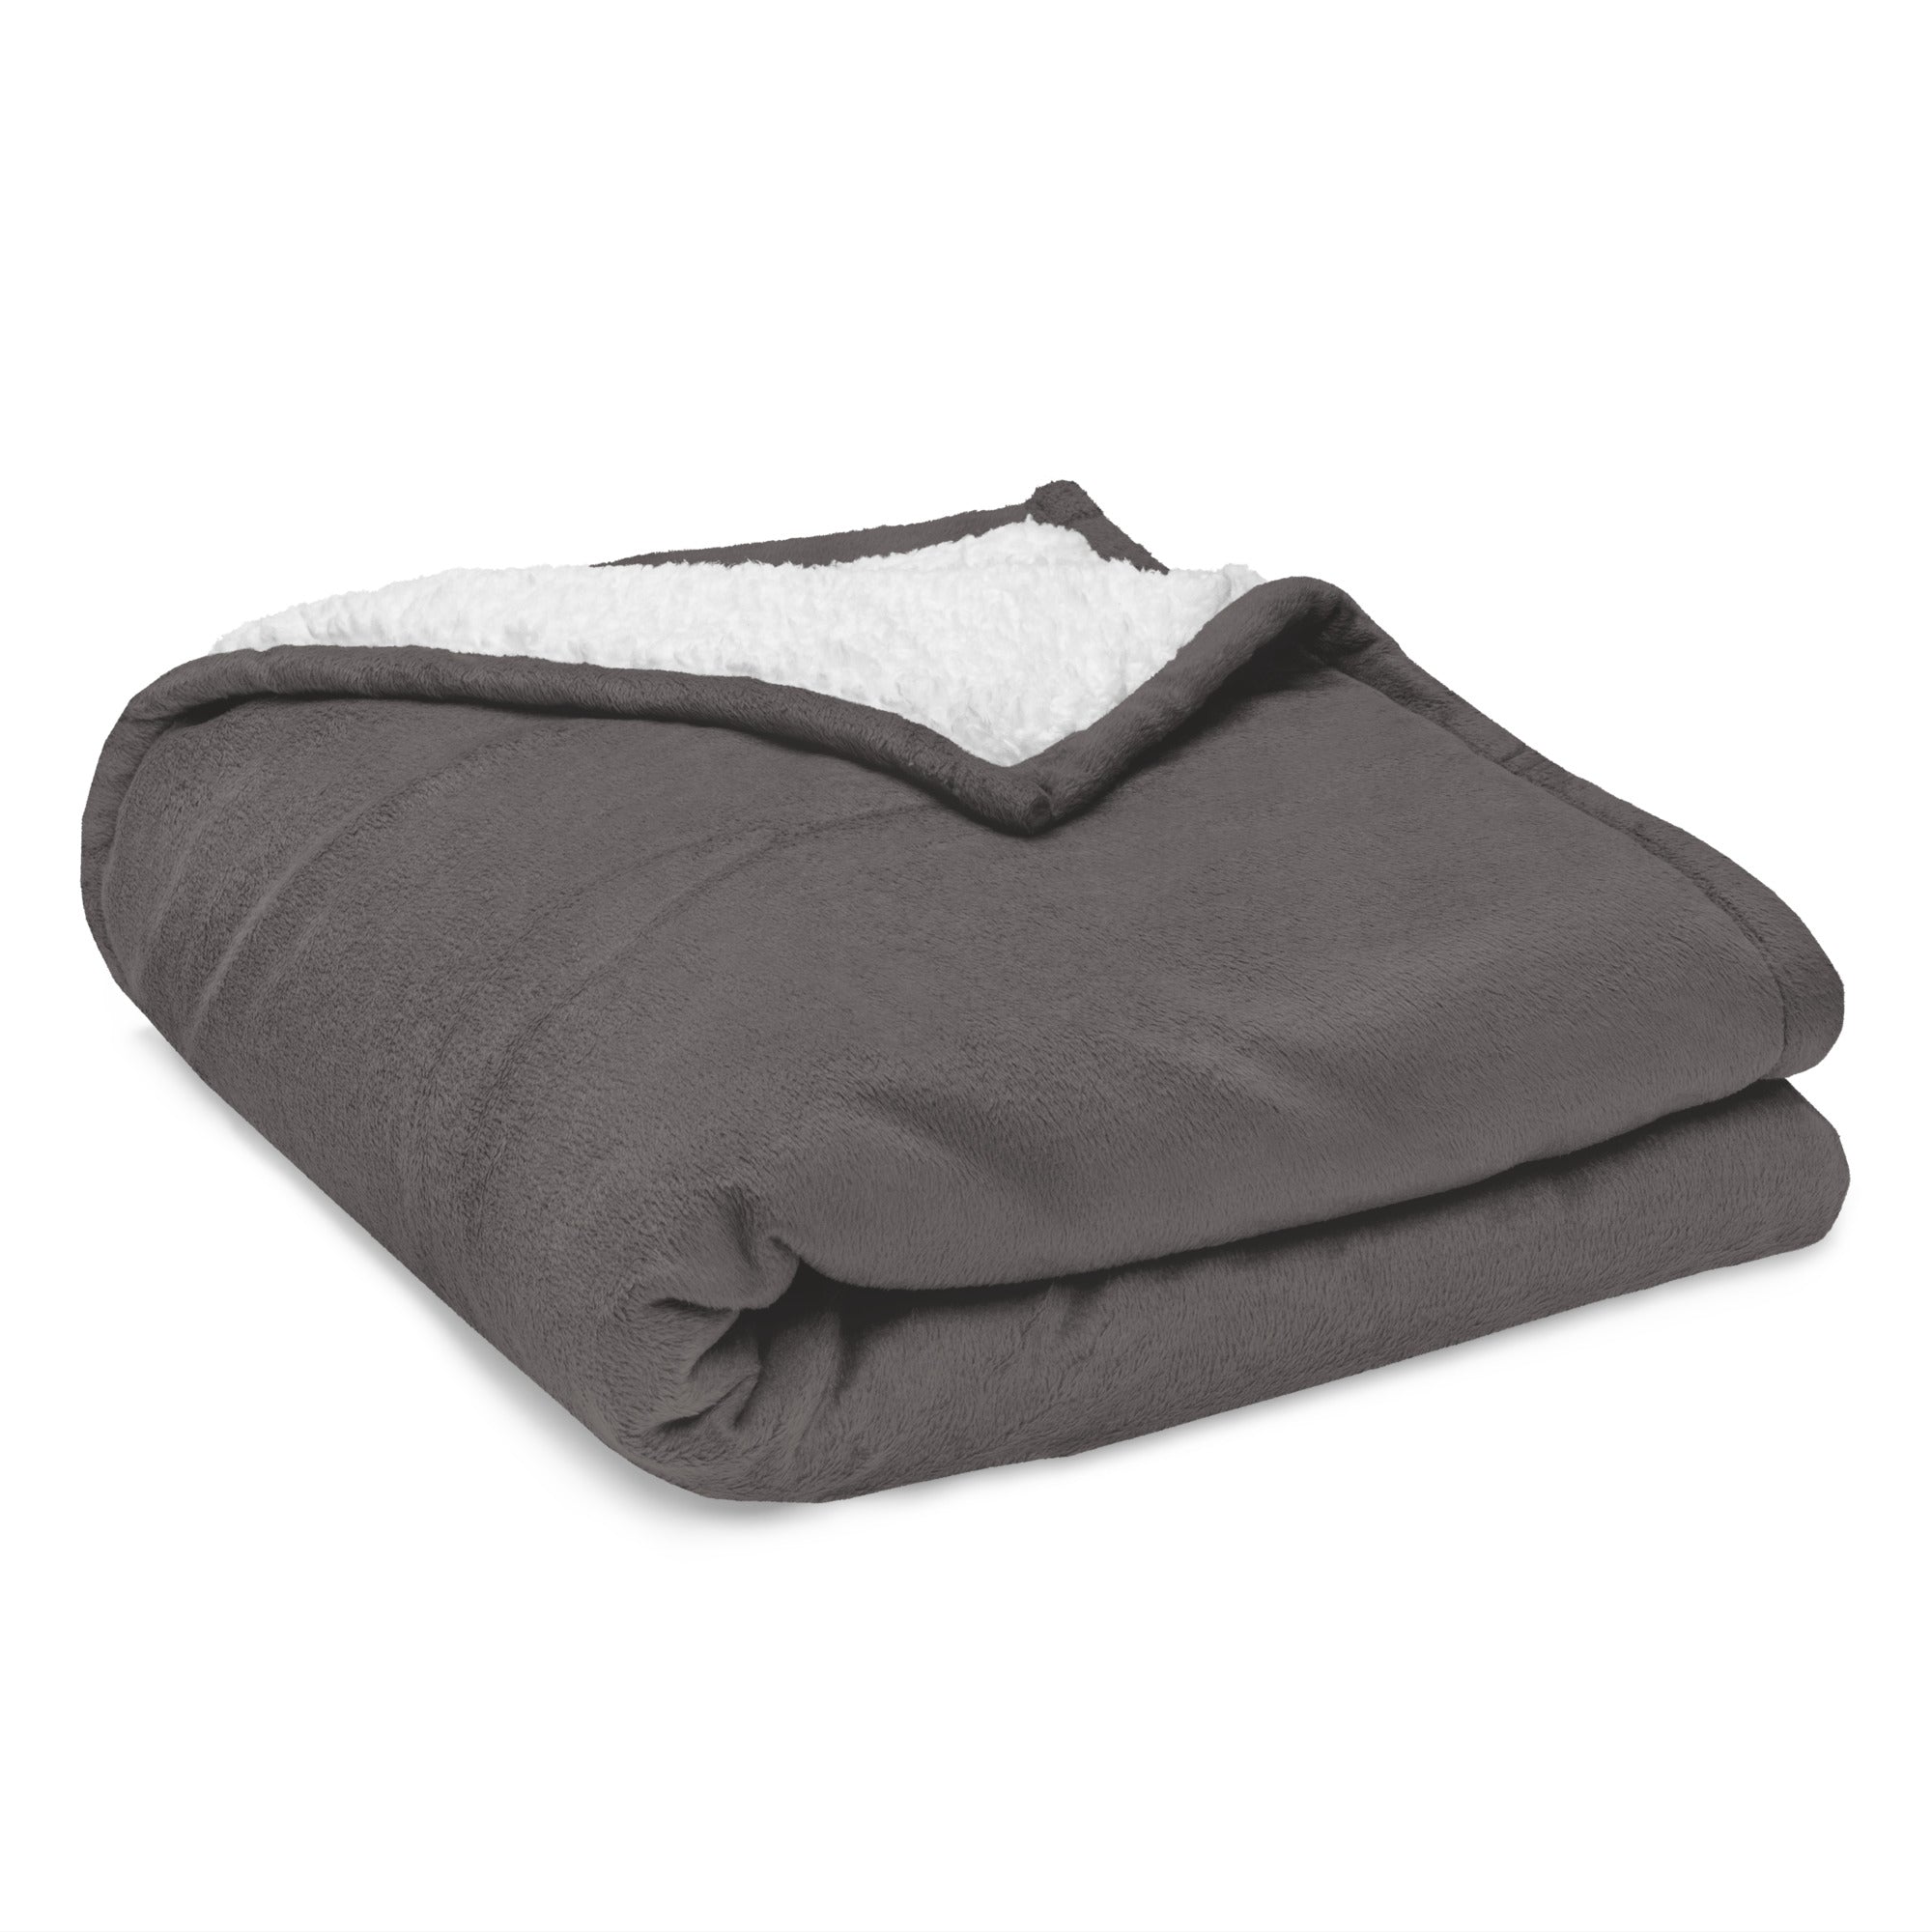 DealRoom Premium sherpa blanket